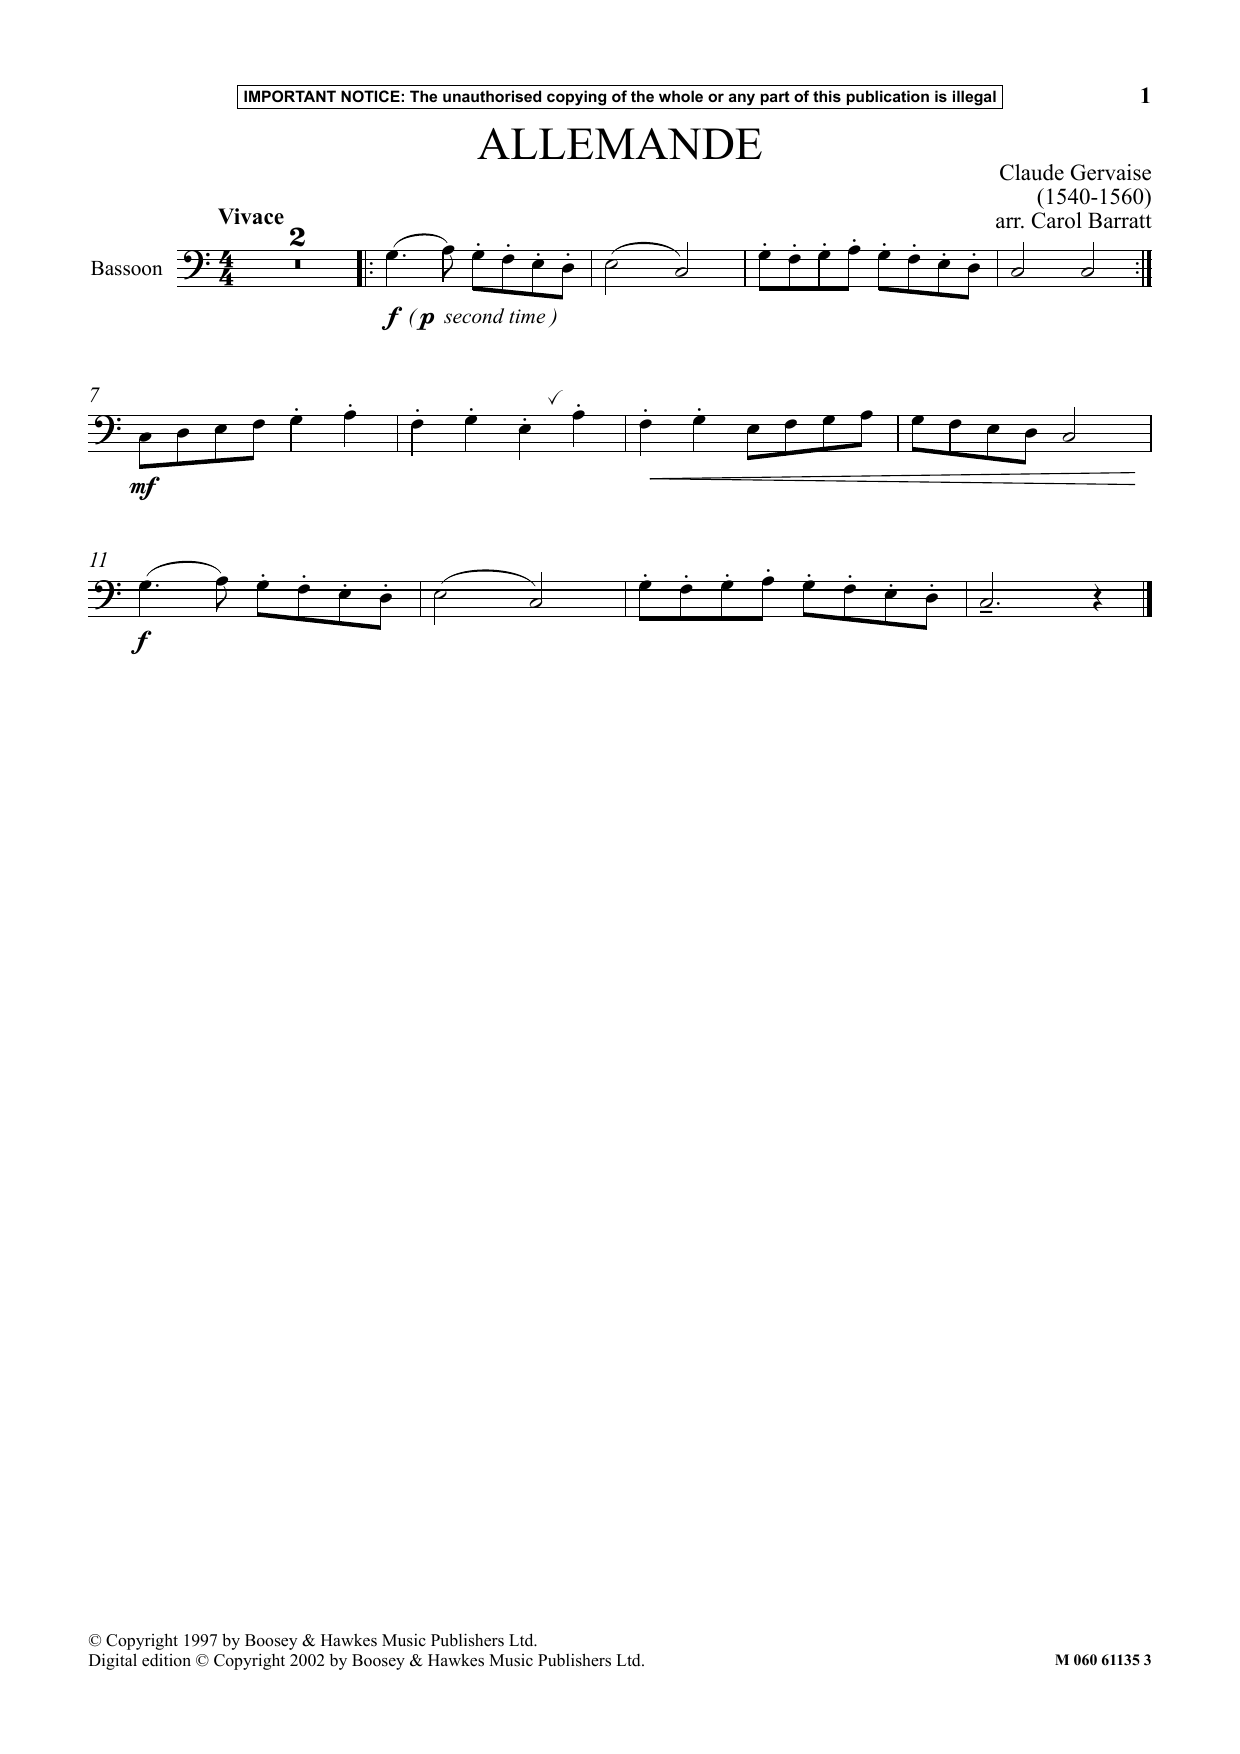 Carol Barratt Allemande Sheet Music Notes & Chords for Instrumental Solo - Download or Print PDF